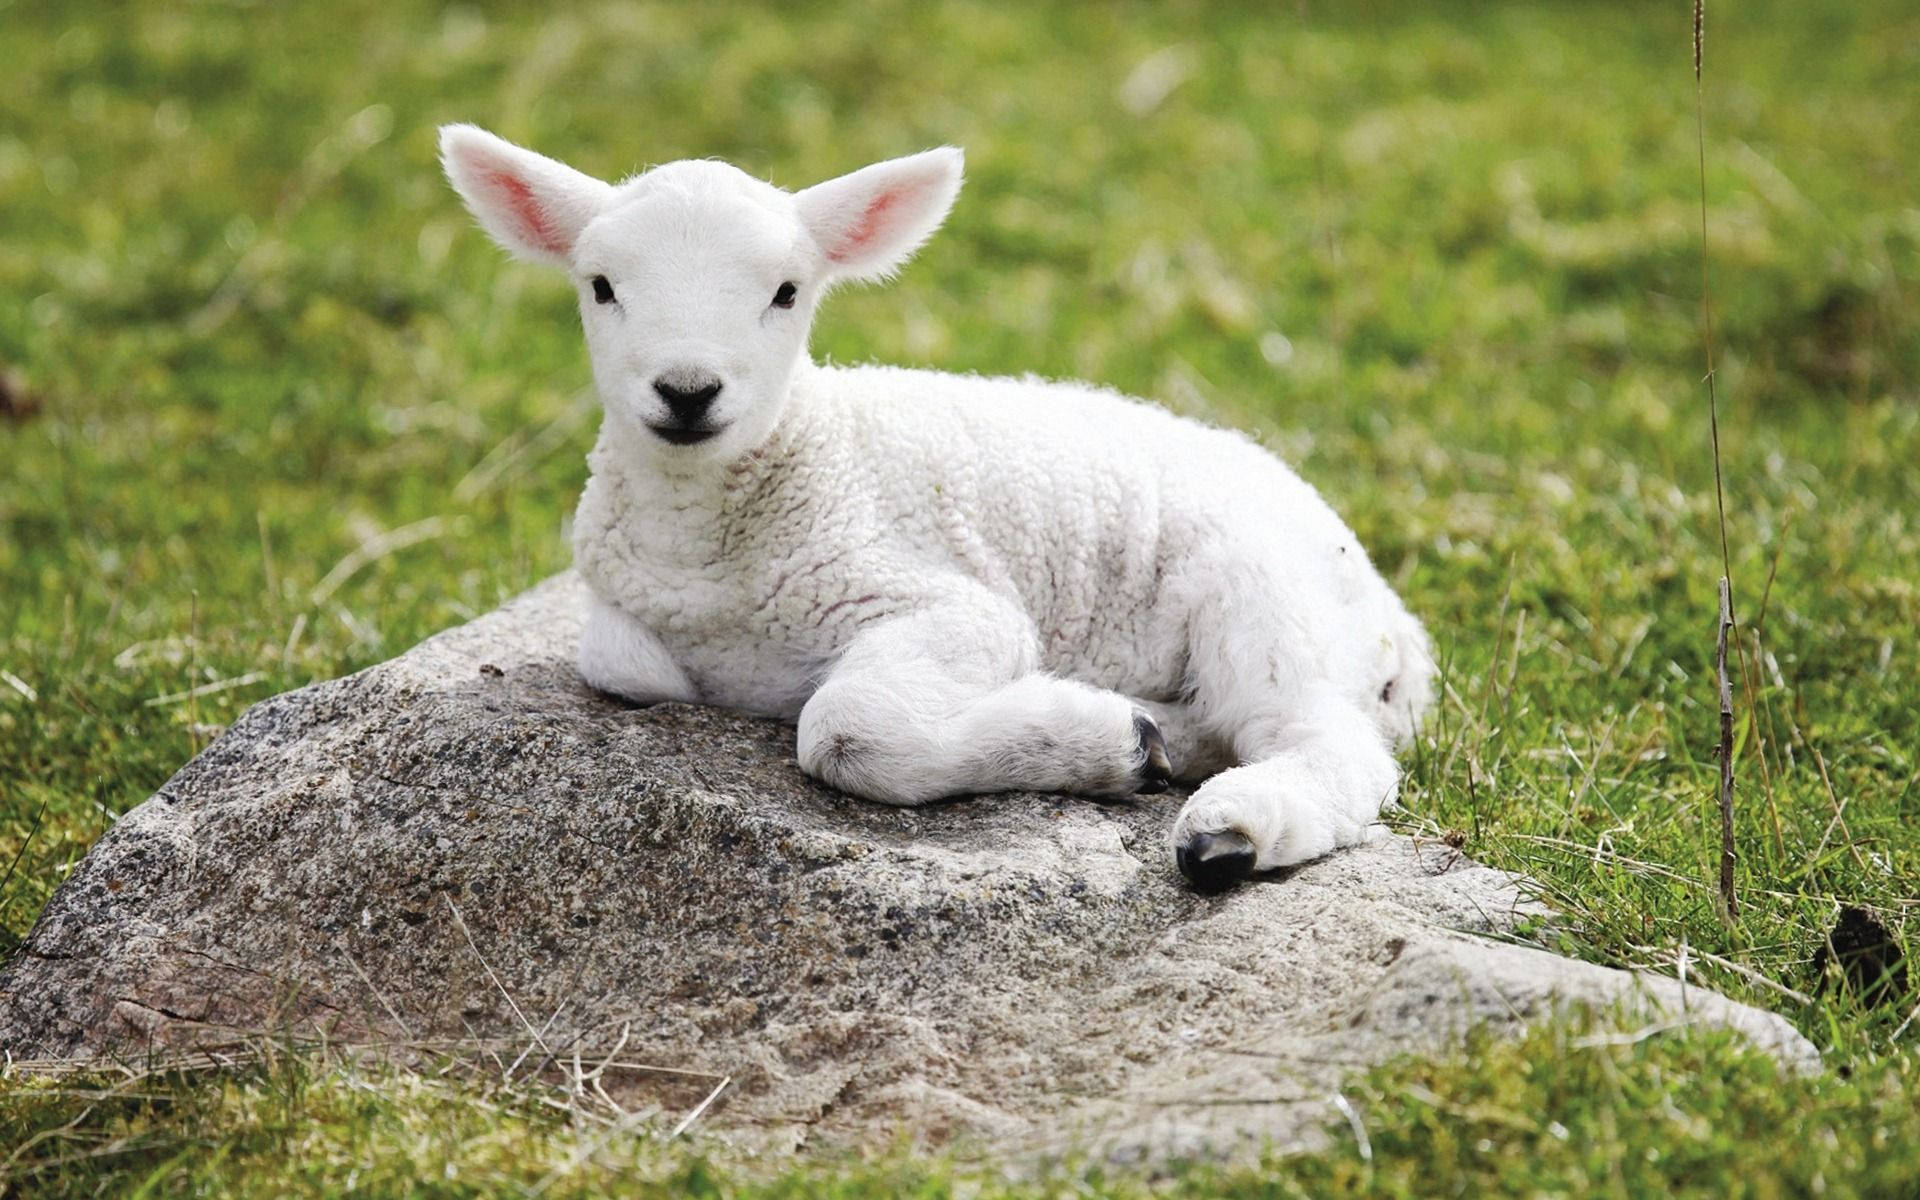 Lamb On Gray Rock In Grass Field Wallpaper